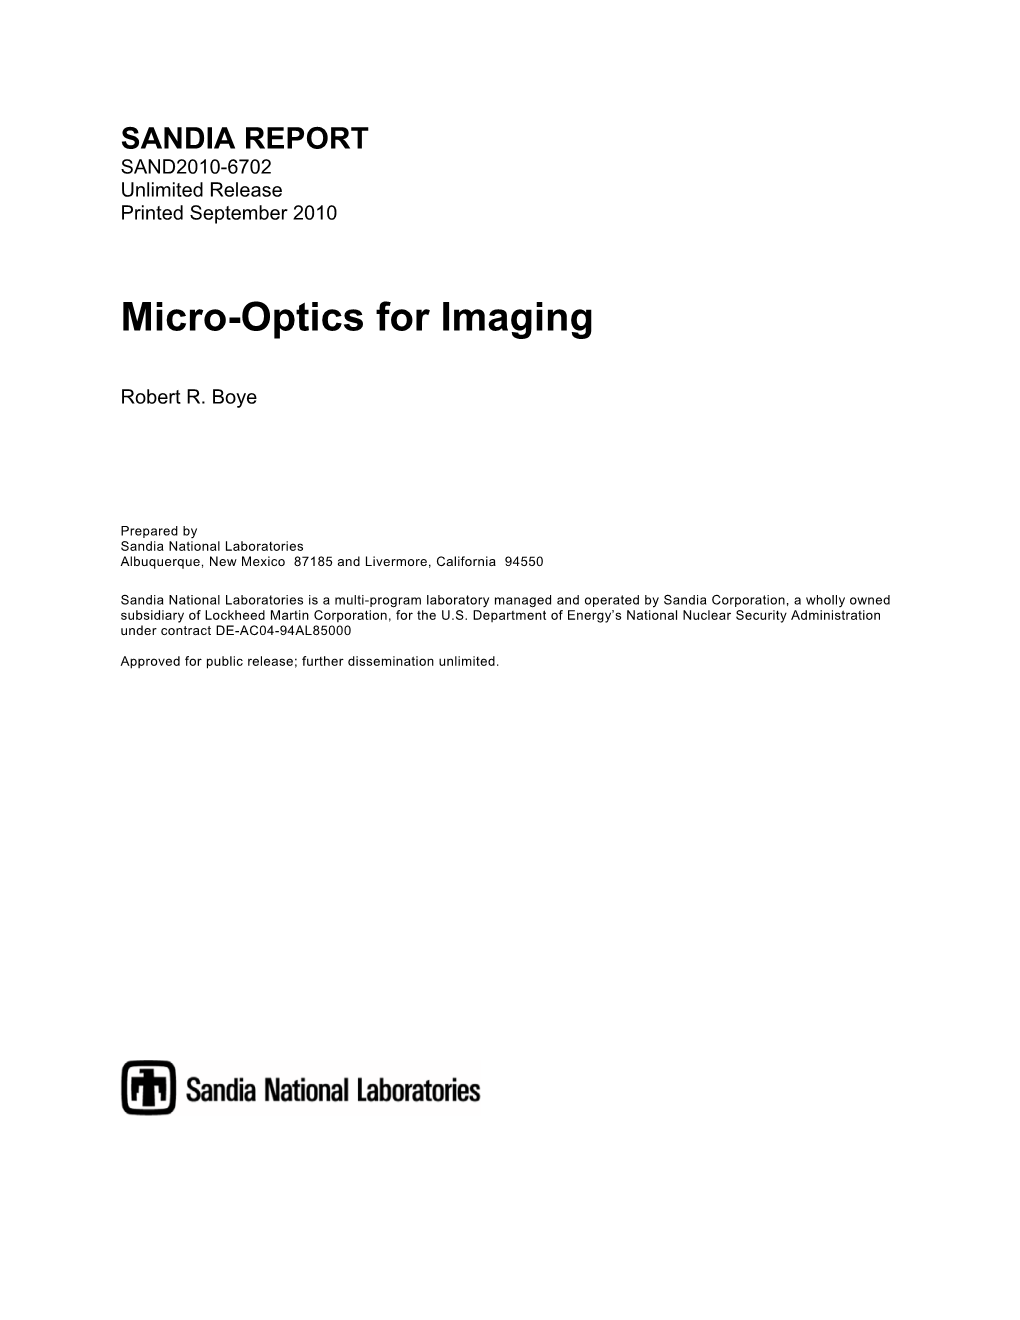 Micro-Optics for Imaging